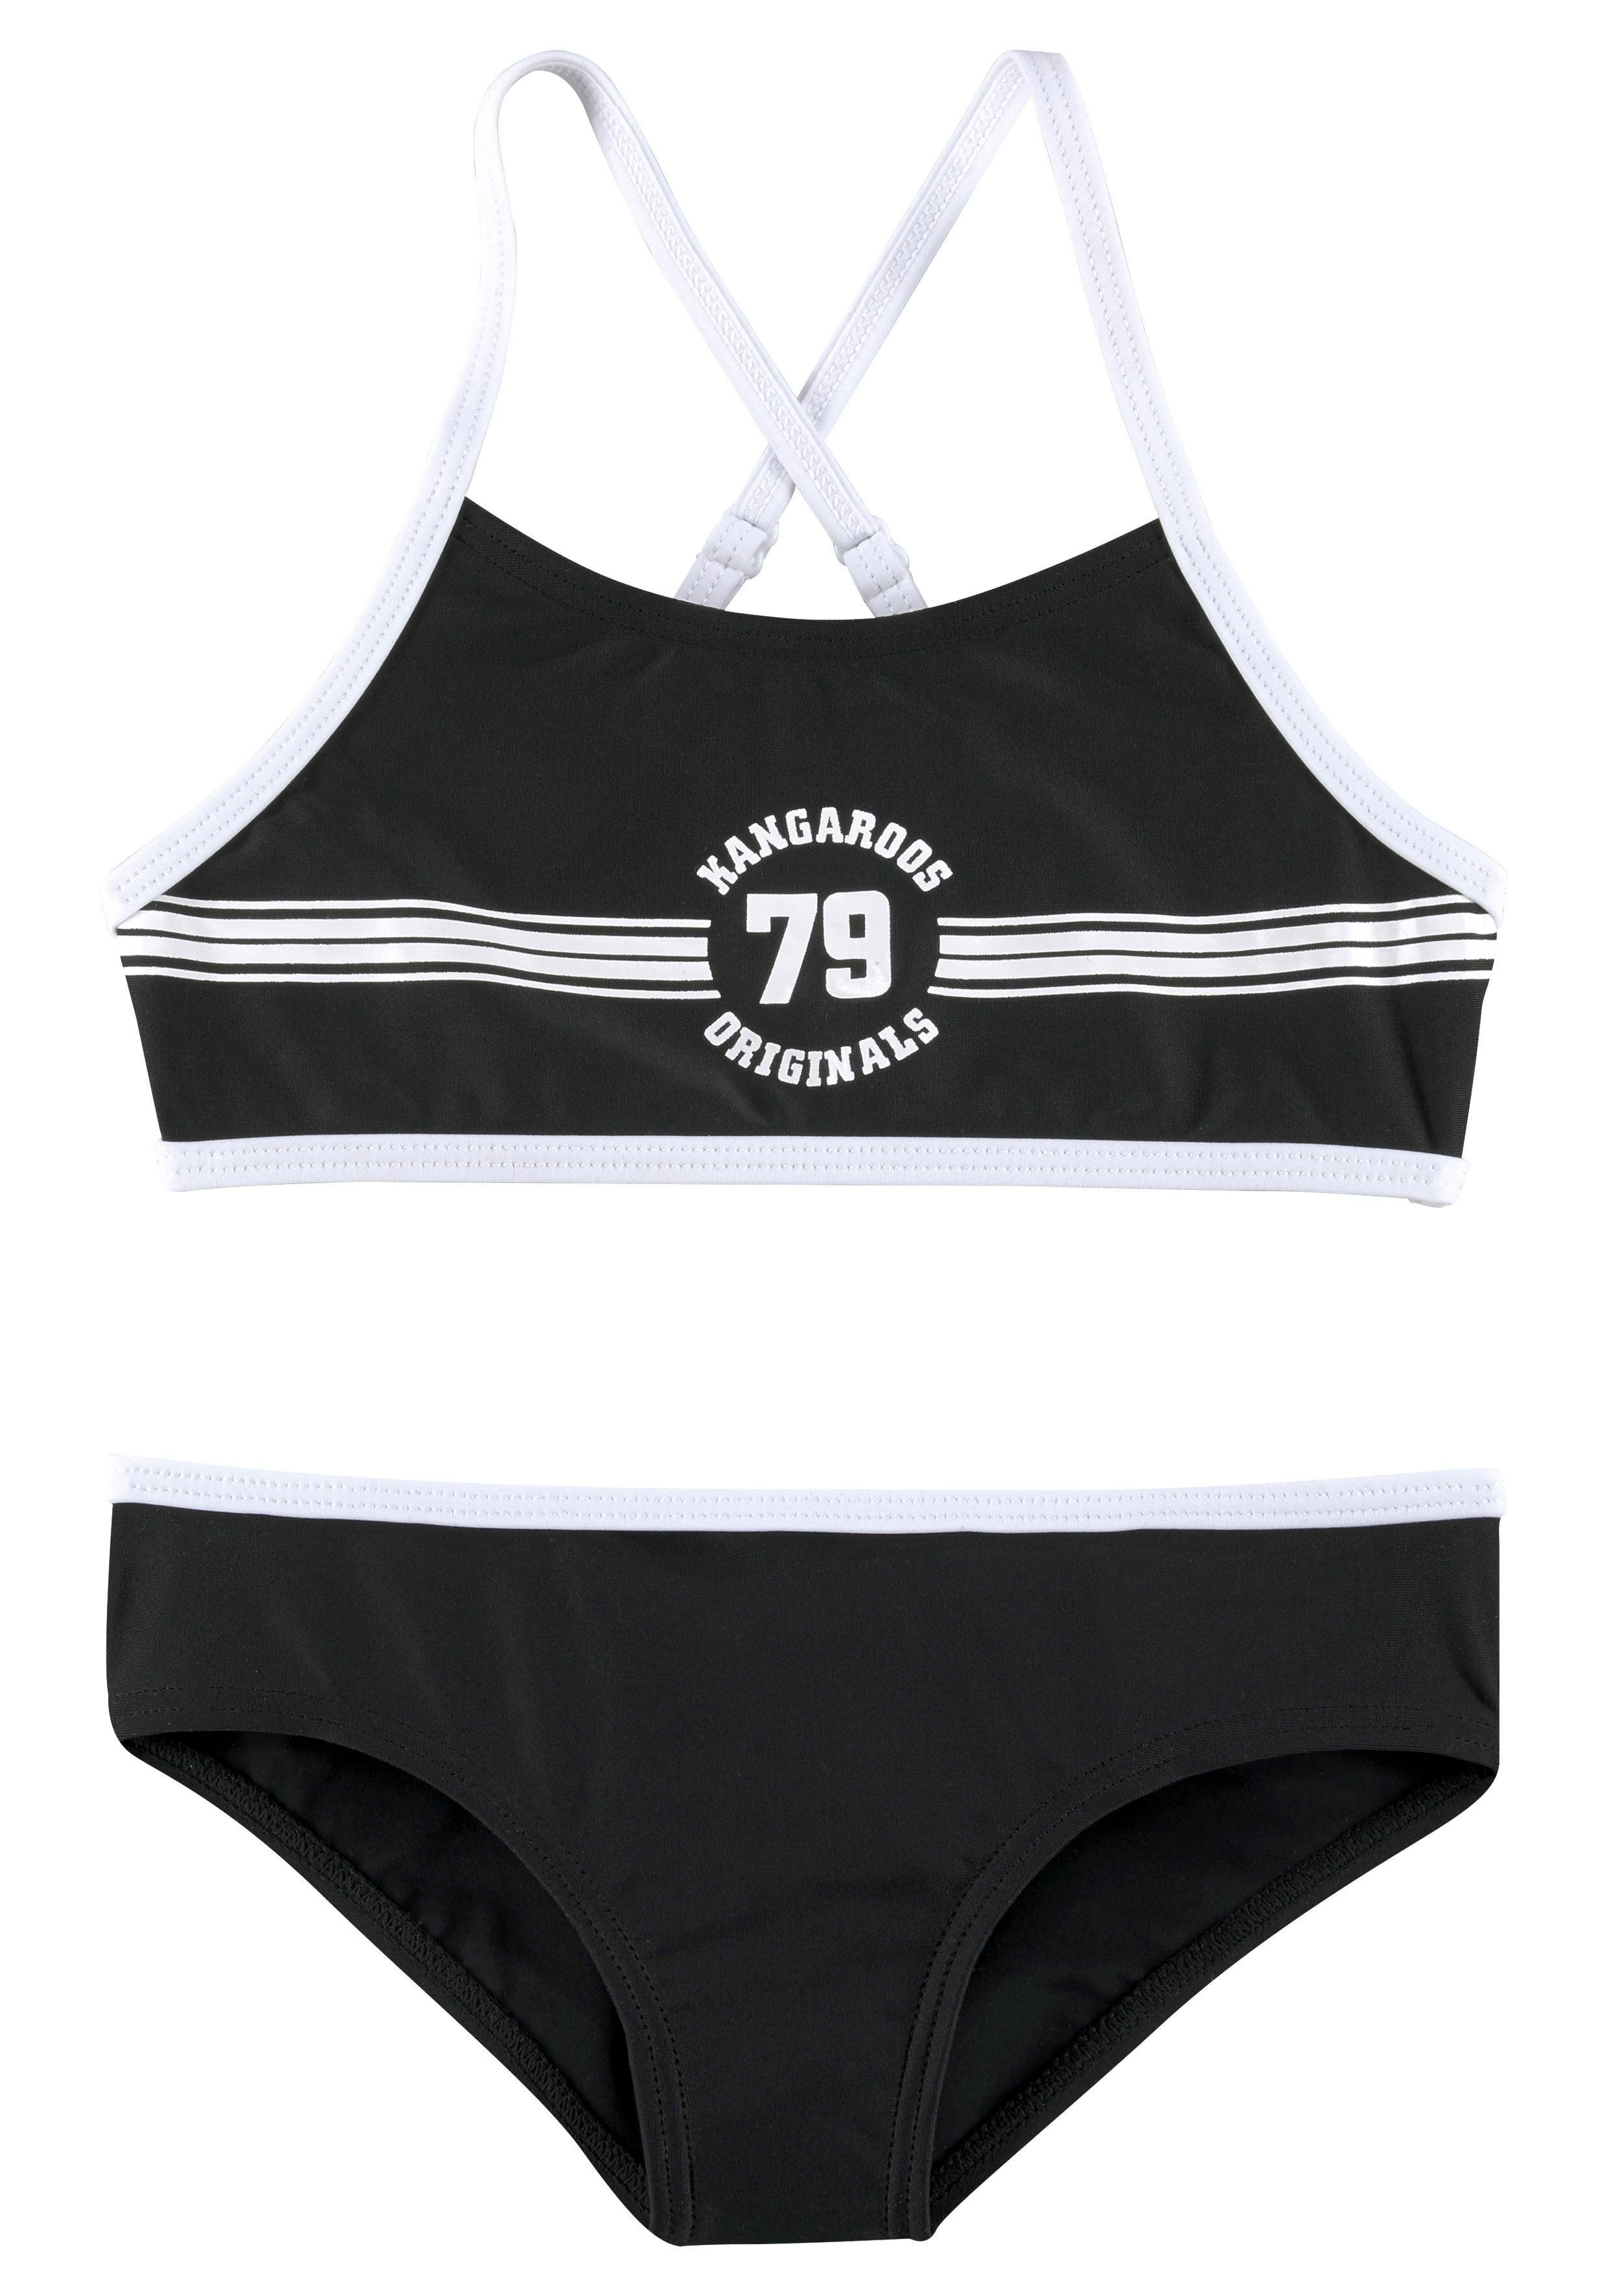 KangaROOS Bustier-Bikini Sporty schwarz mit sportlichem Frontdruck